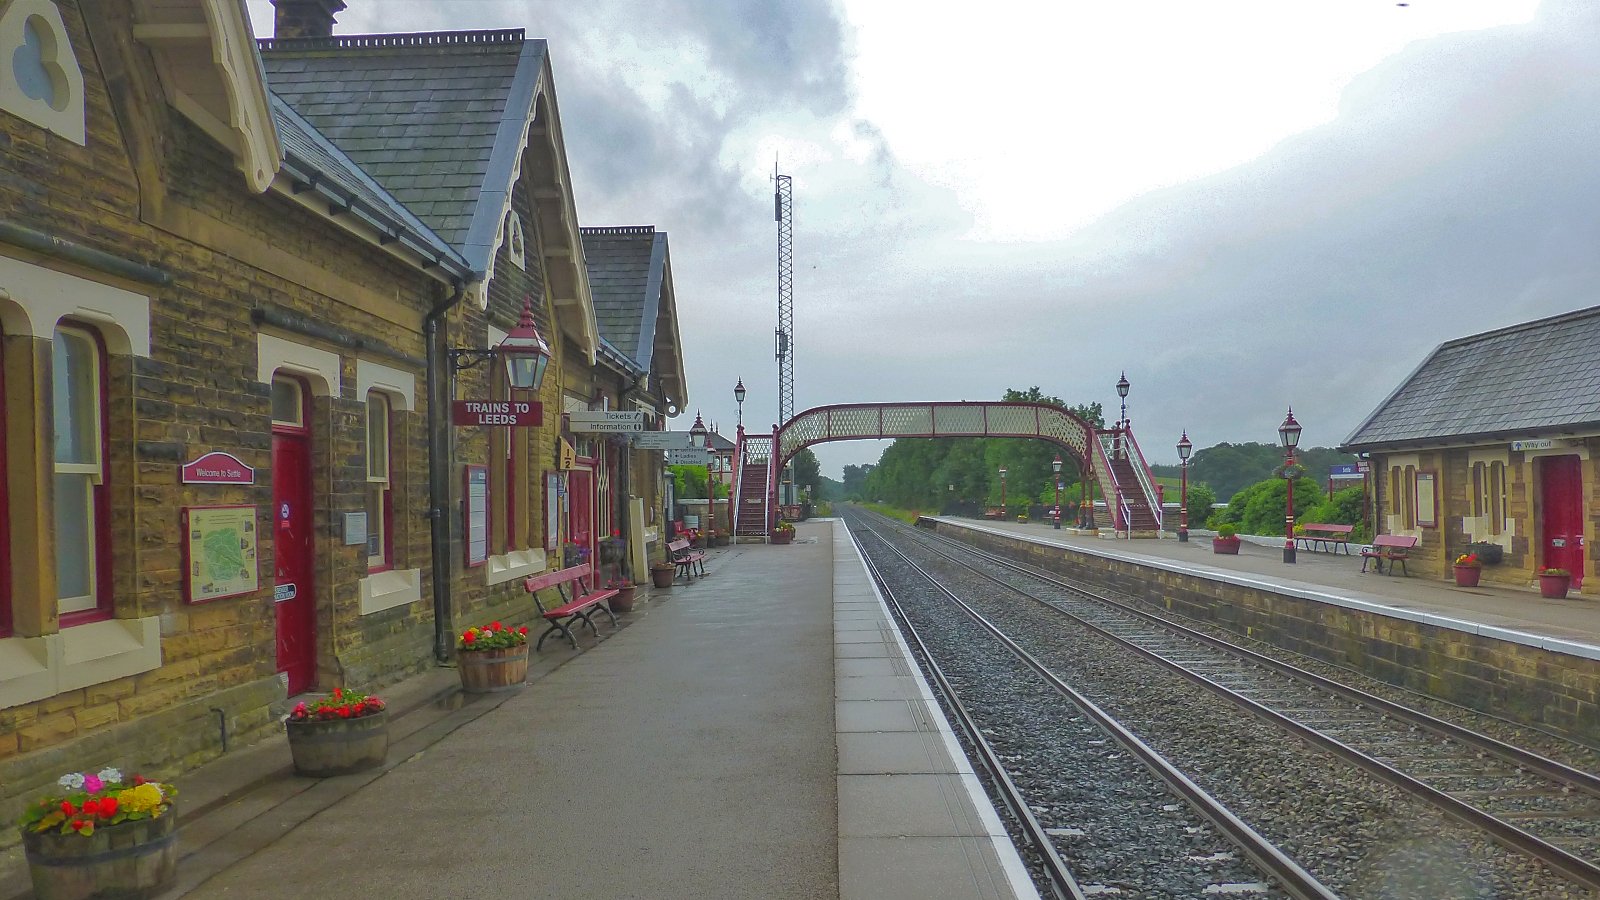 Settle Railway Station